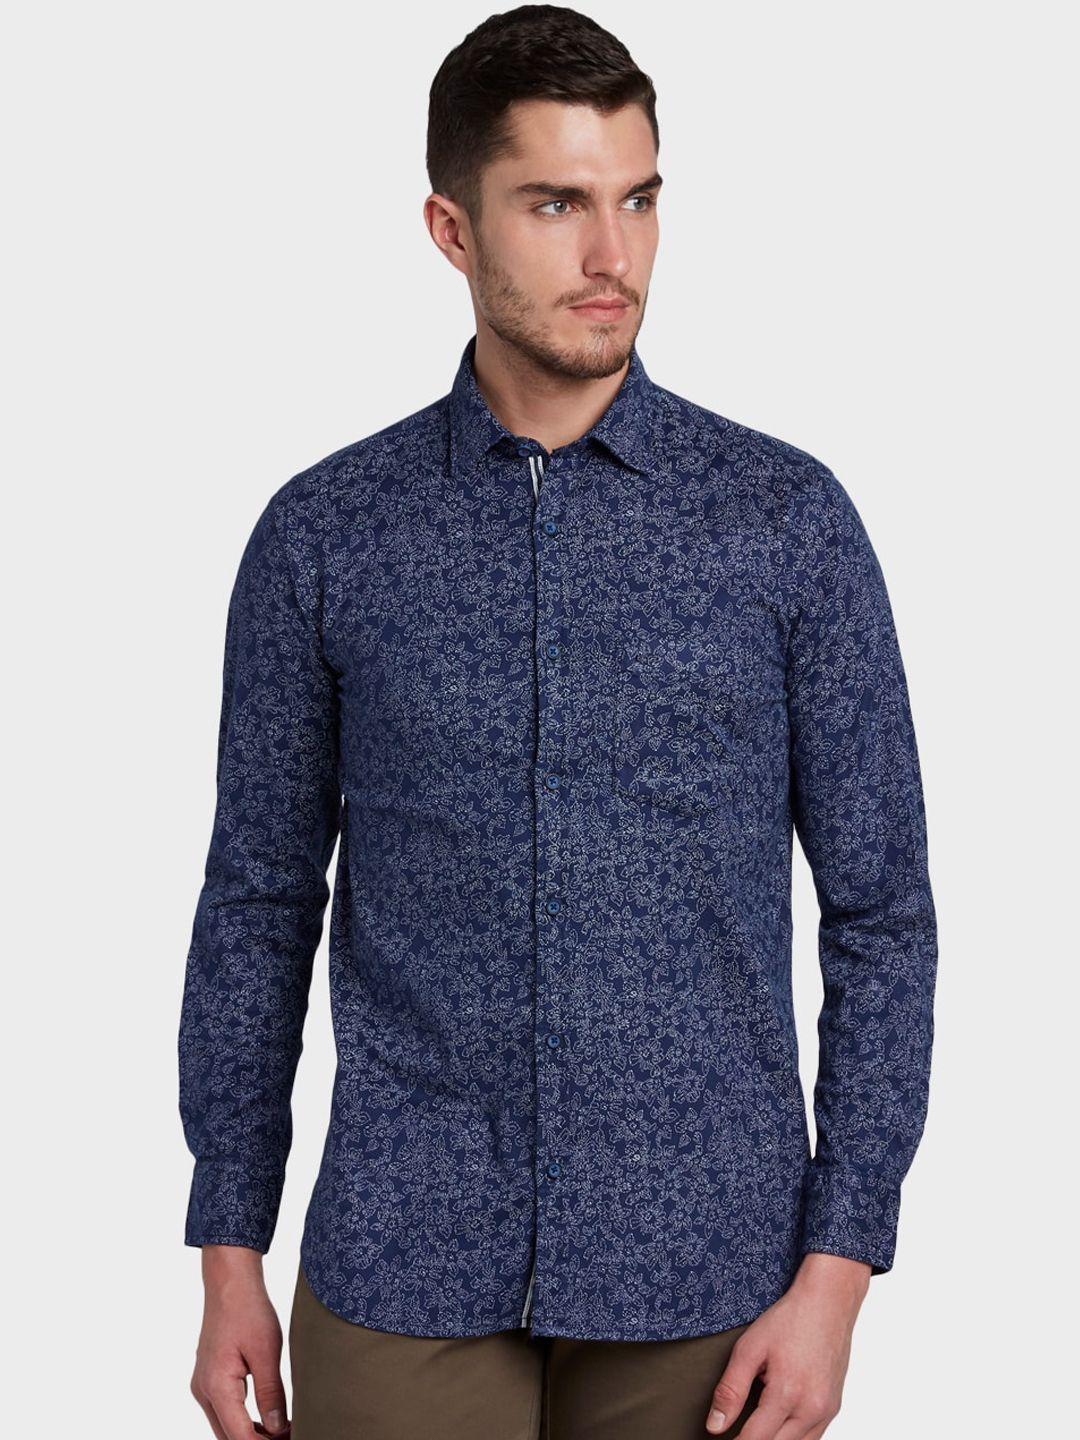 colorplus men navy blue & white regular fit printed casual shirt